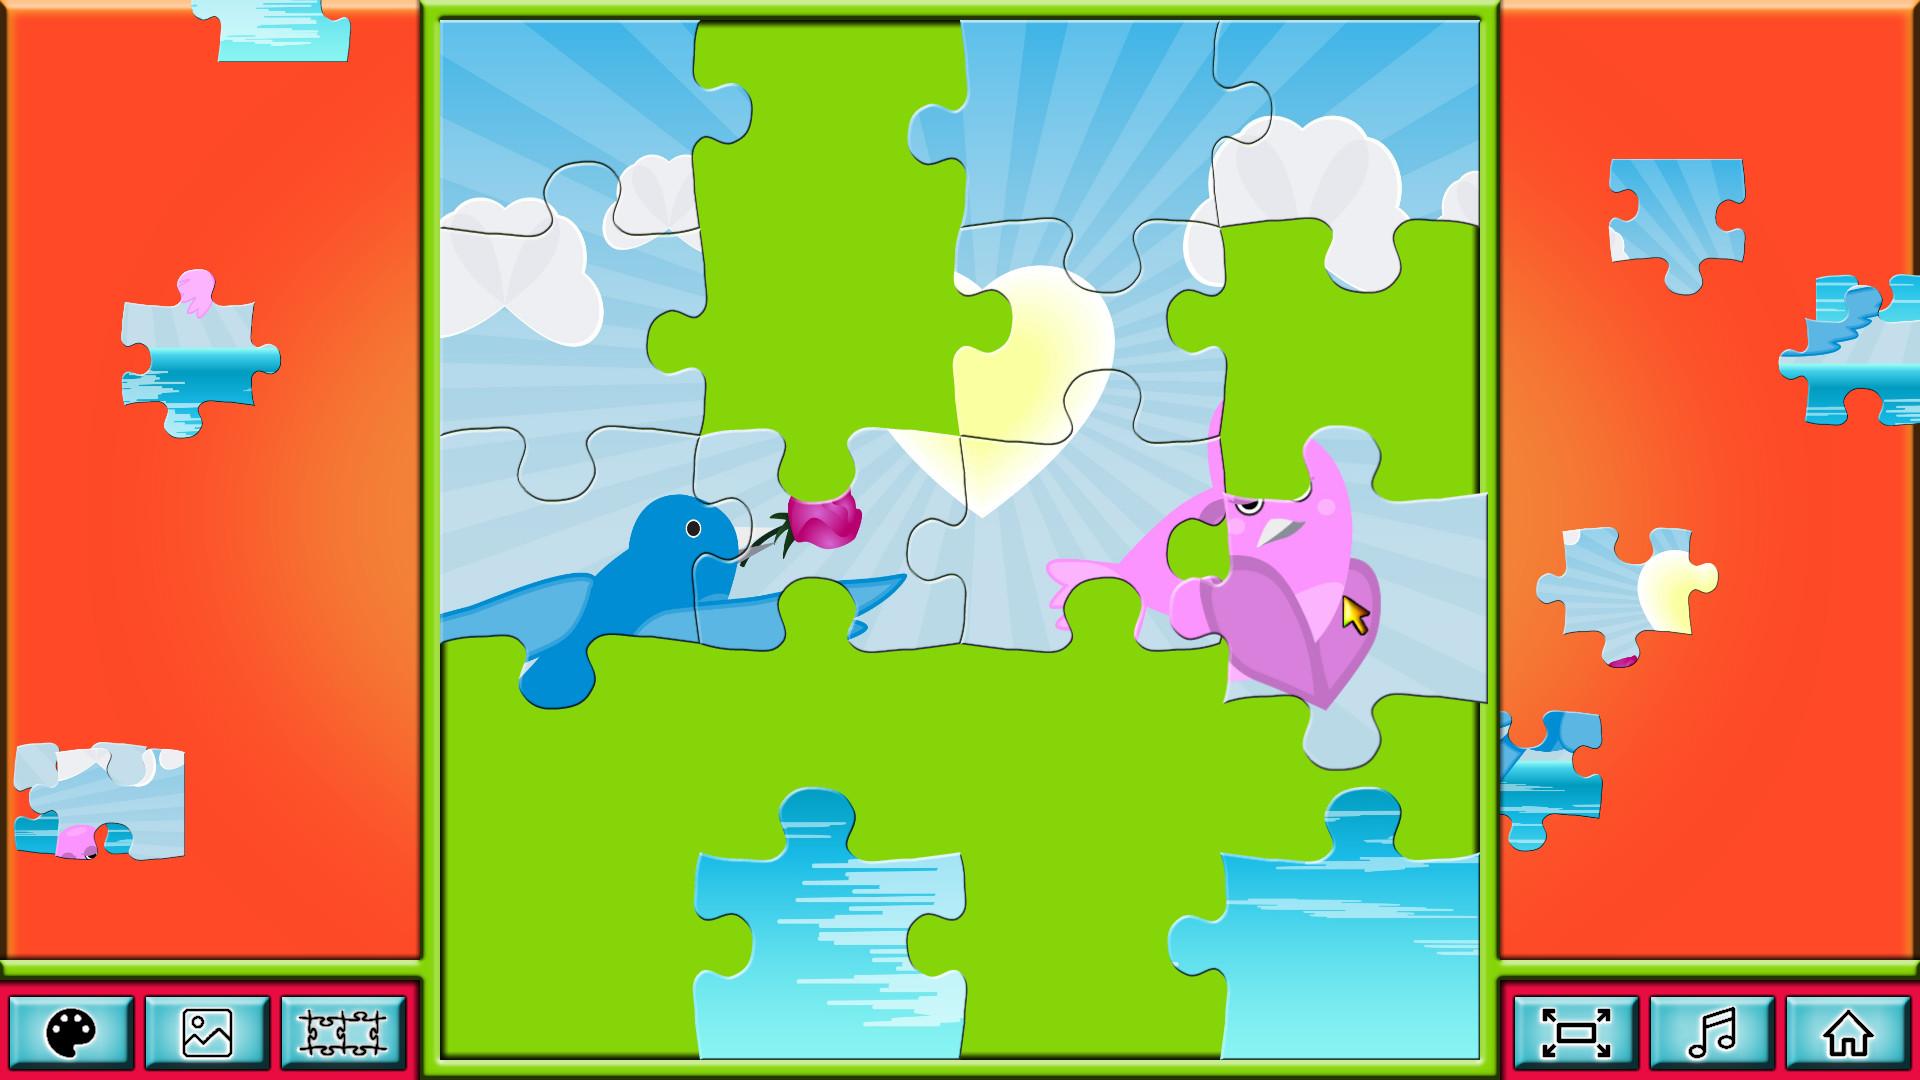 Screenshot №6 from game Pixel Puzzles Junior Jigsaw